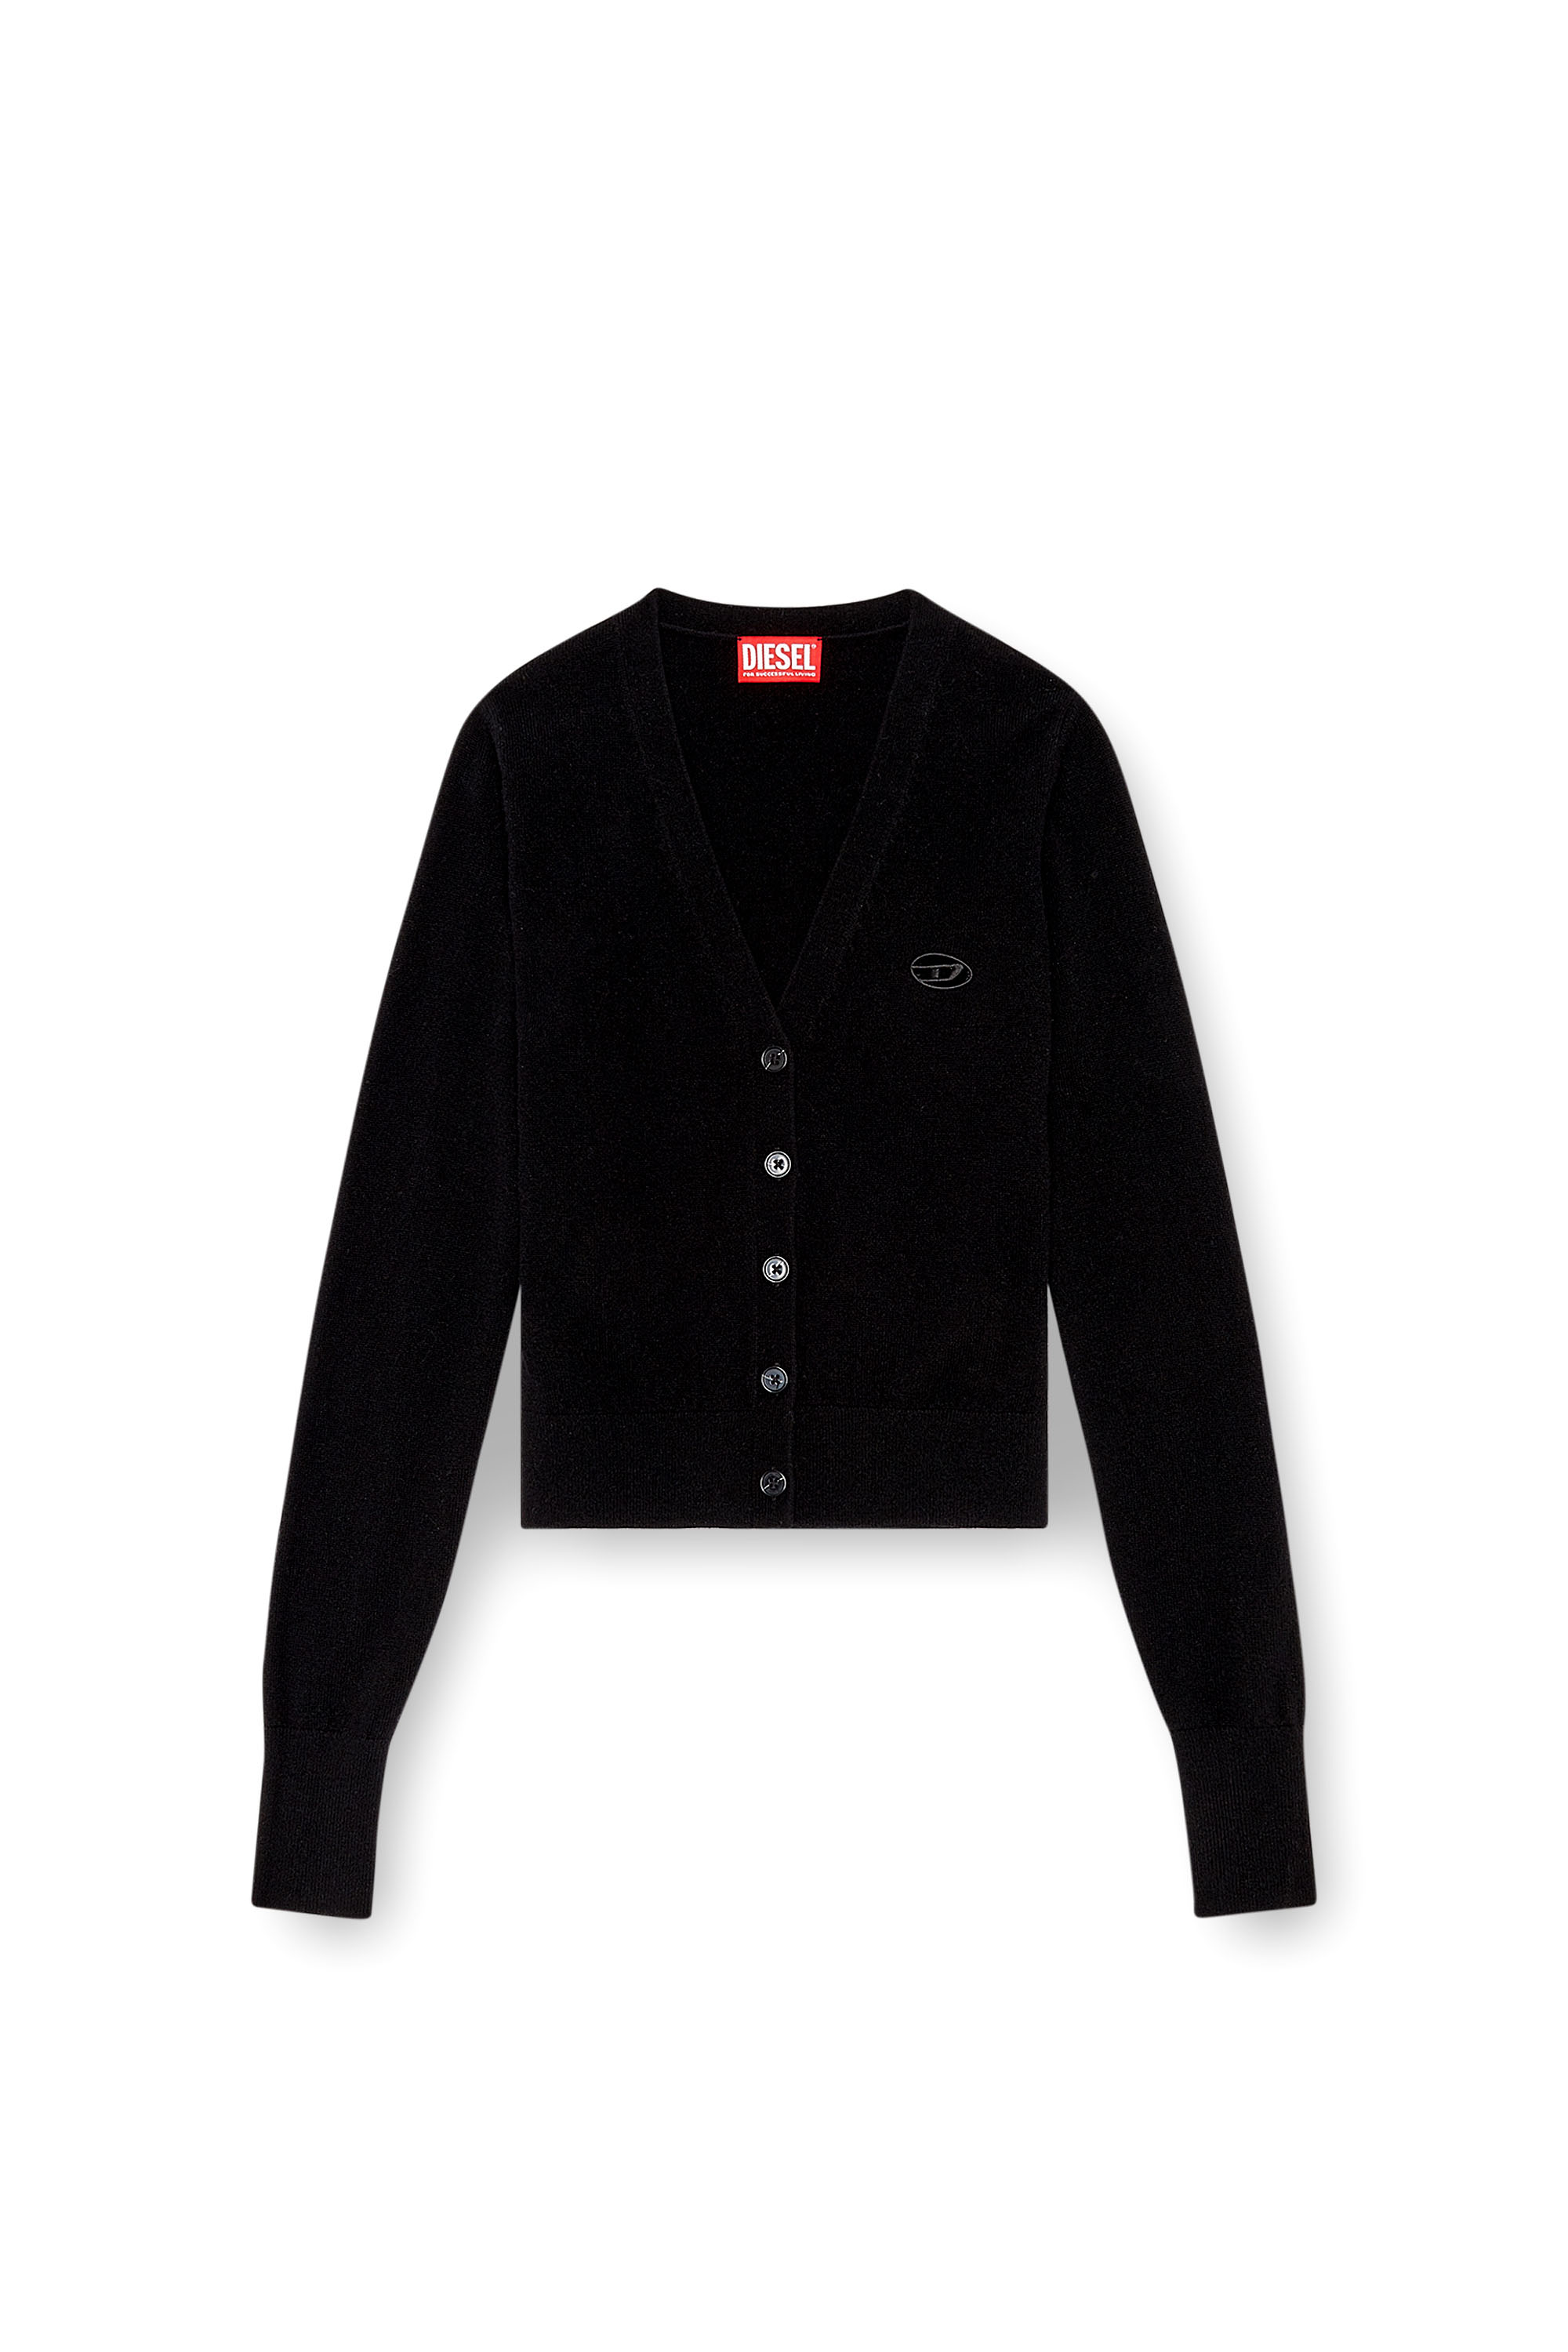 Diesel - M-ARTE, Female Wool and cashmere cardigan in Black - Image 3